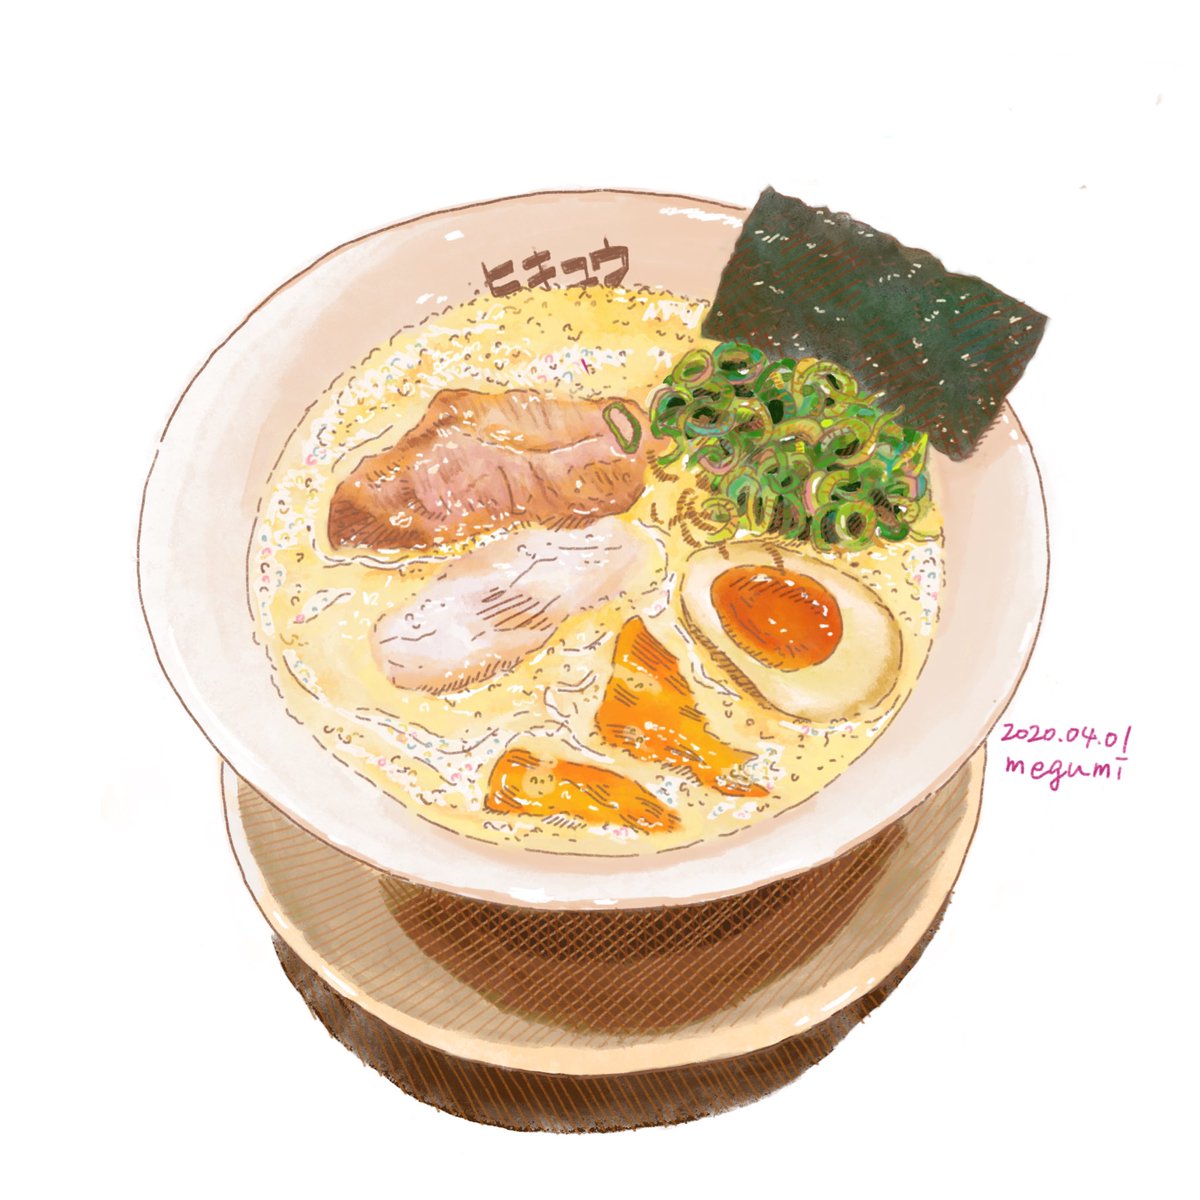 Twitter 上的 石川 恵 いしかわめぐみ クリエポm 13 ラーメン5日目 言わずと知れた人気店 地元では 神戸市六甲道駅のヒキュウです ここはですね なんかおしゃれなんですよ スープをブレンダーで泡立ててるし 器もシュッとしてますからね はい 食べ物